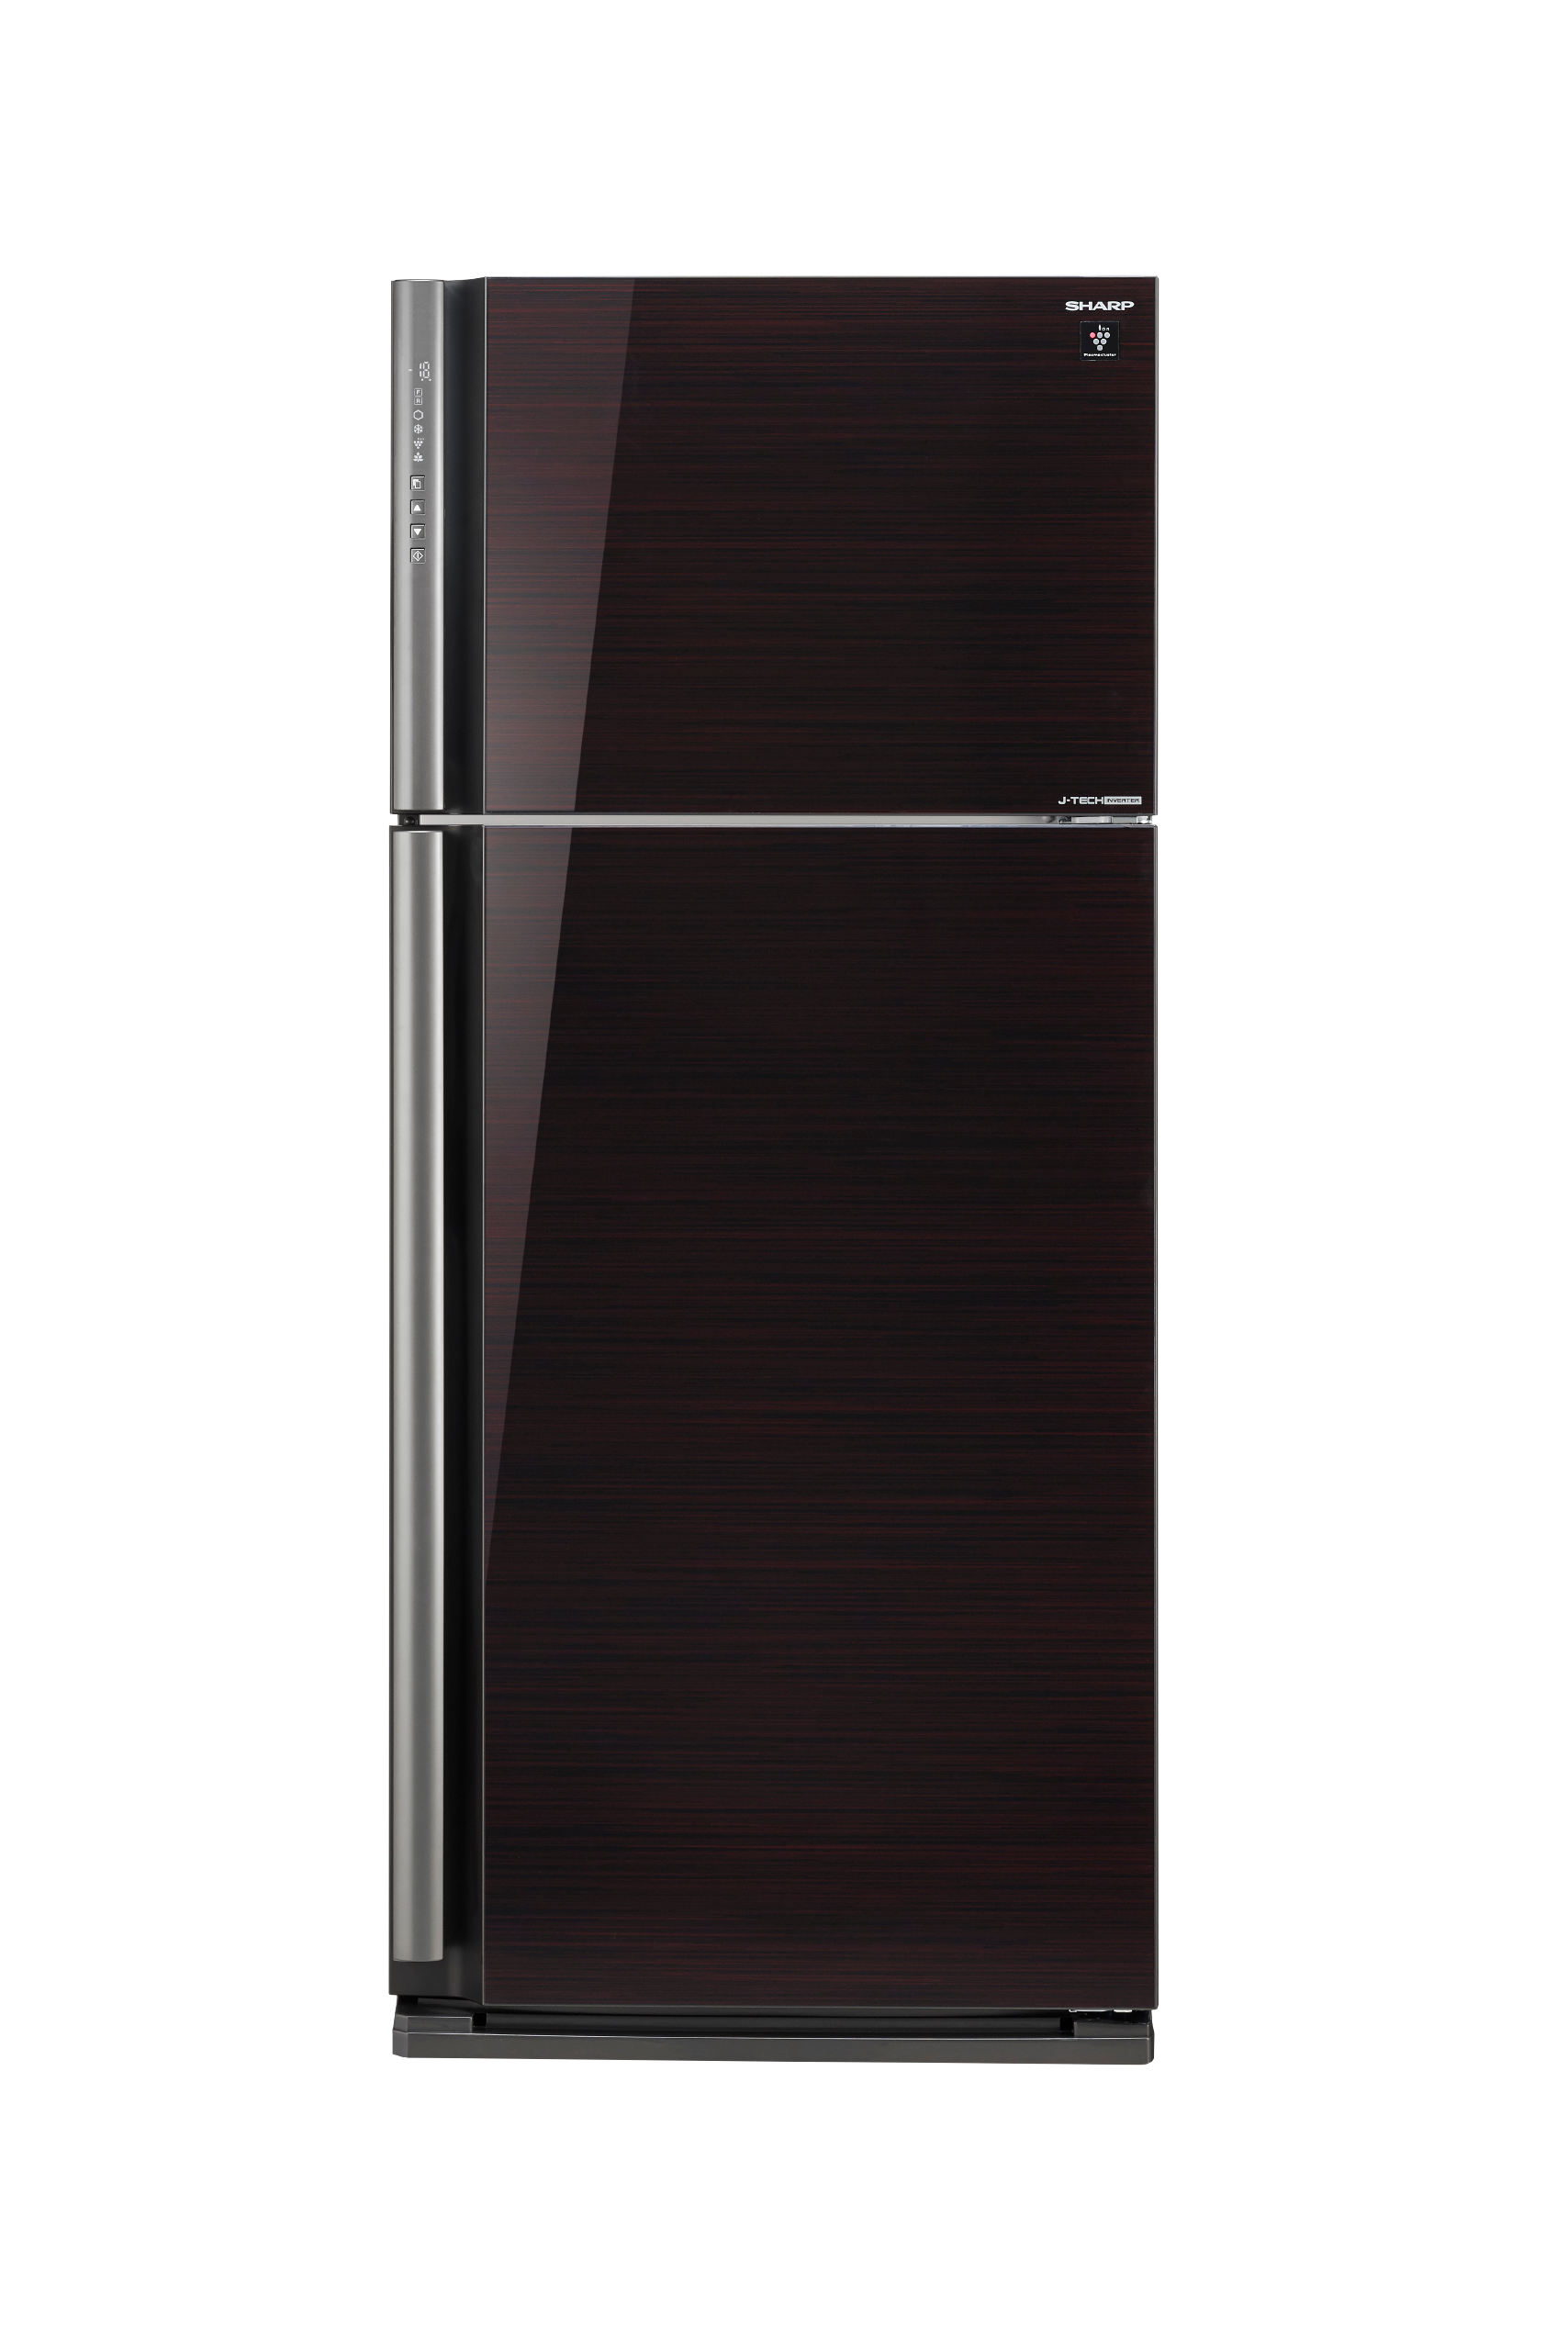 Sharp Refrigerator 627 Liter A+